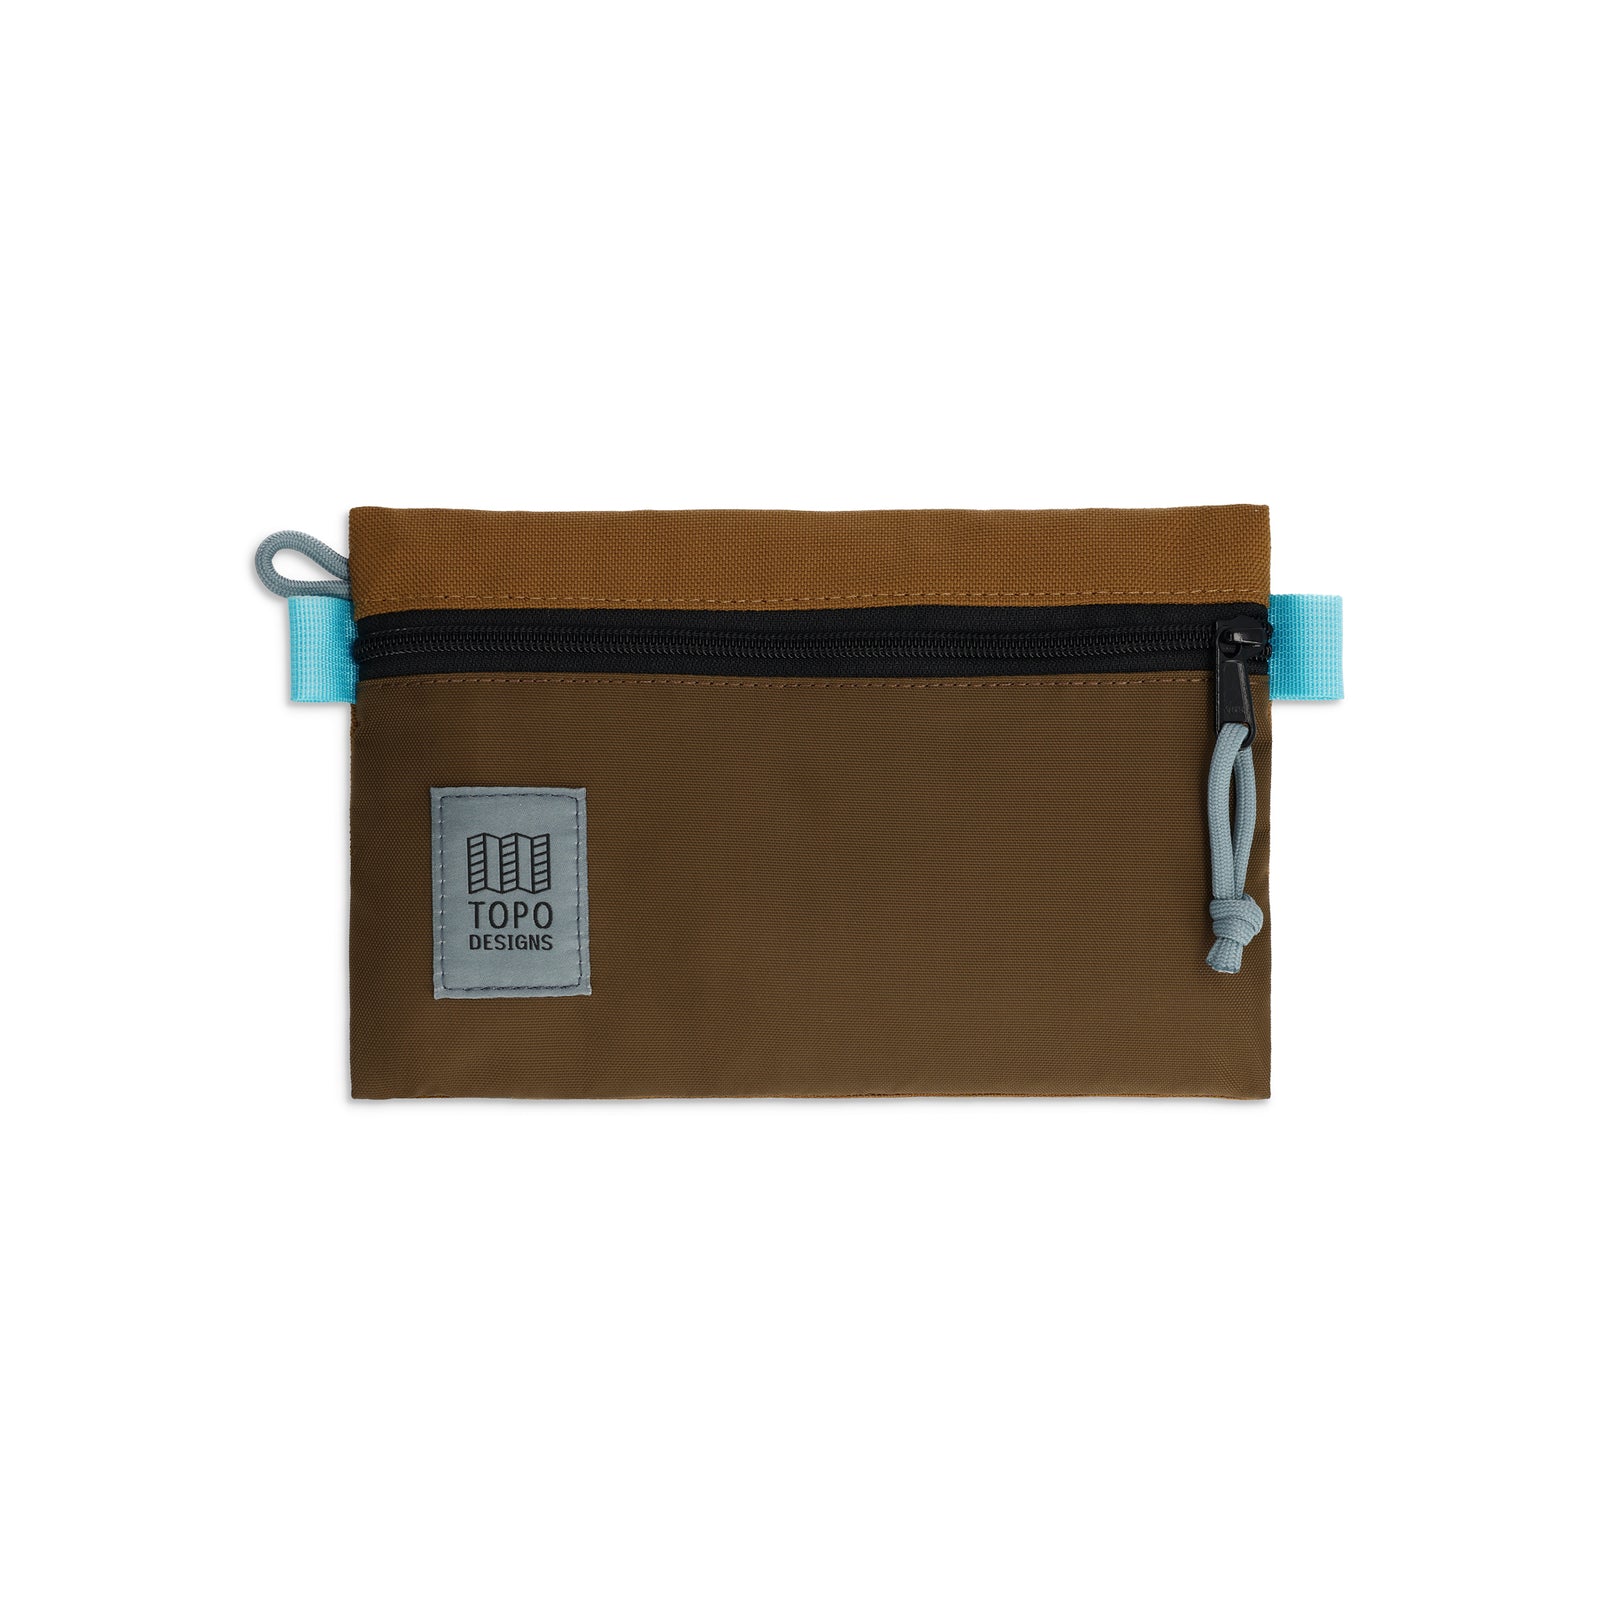 Topo Designs Accessory Bag "Small" in "Desert Palm / Pond Blue"